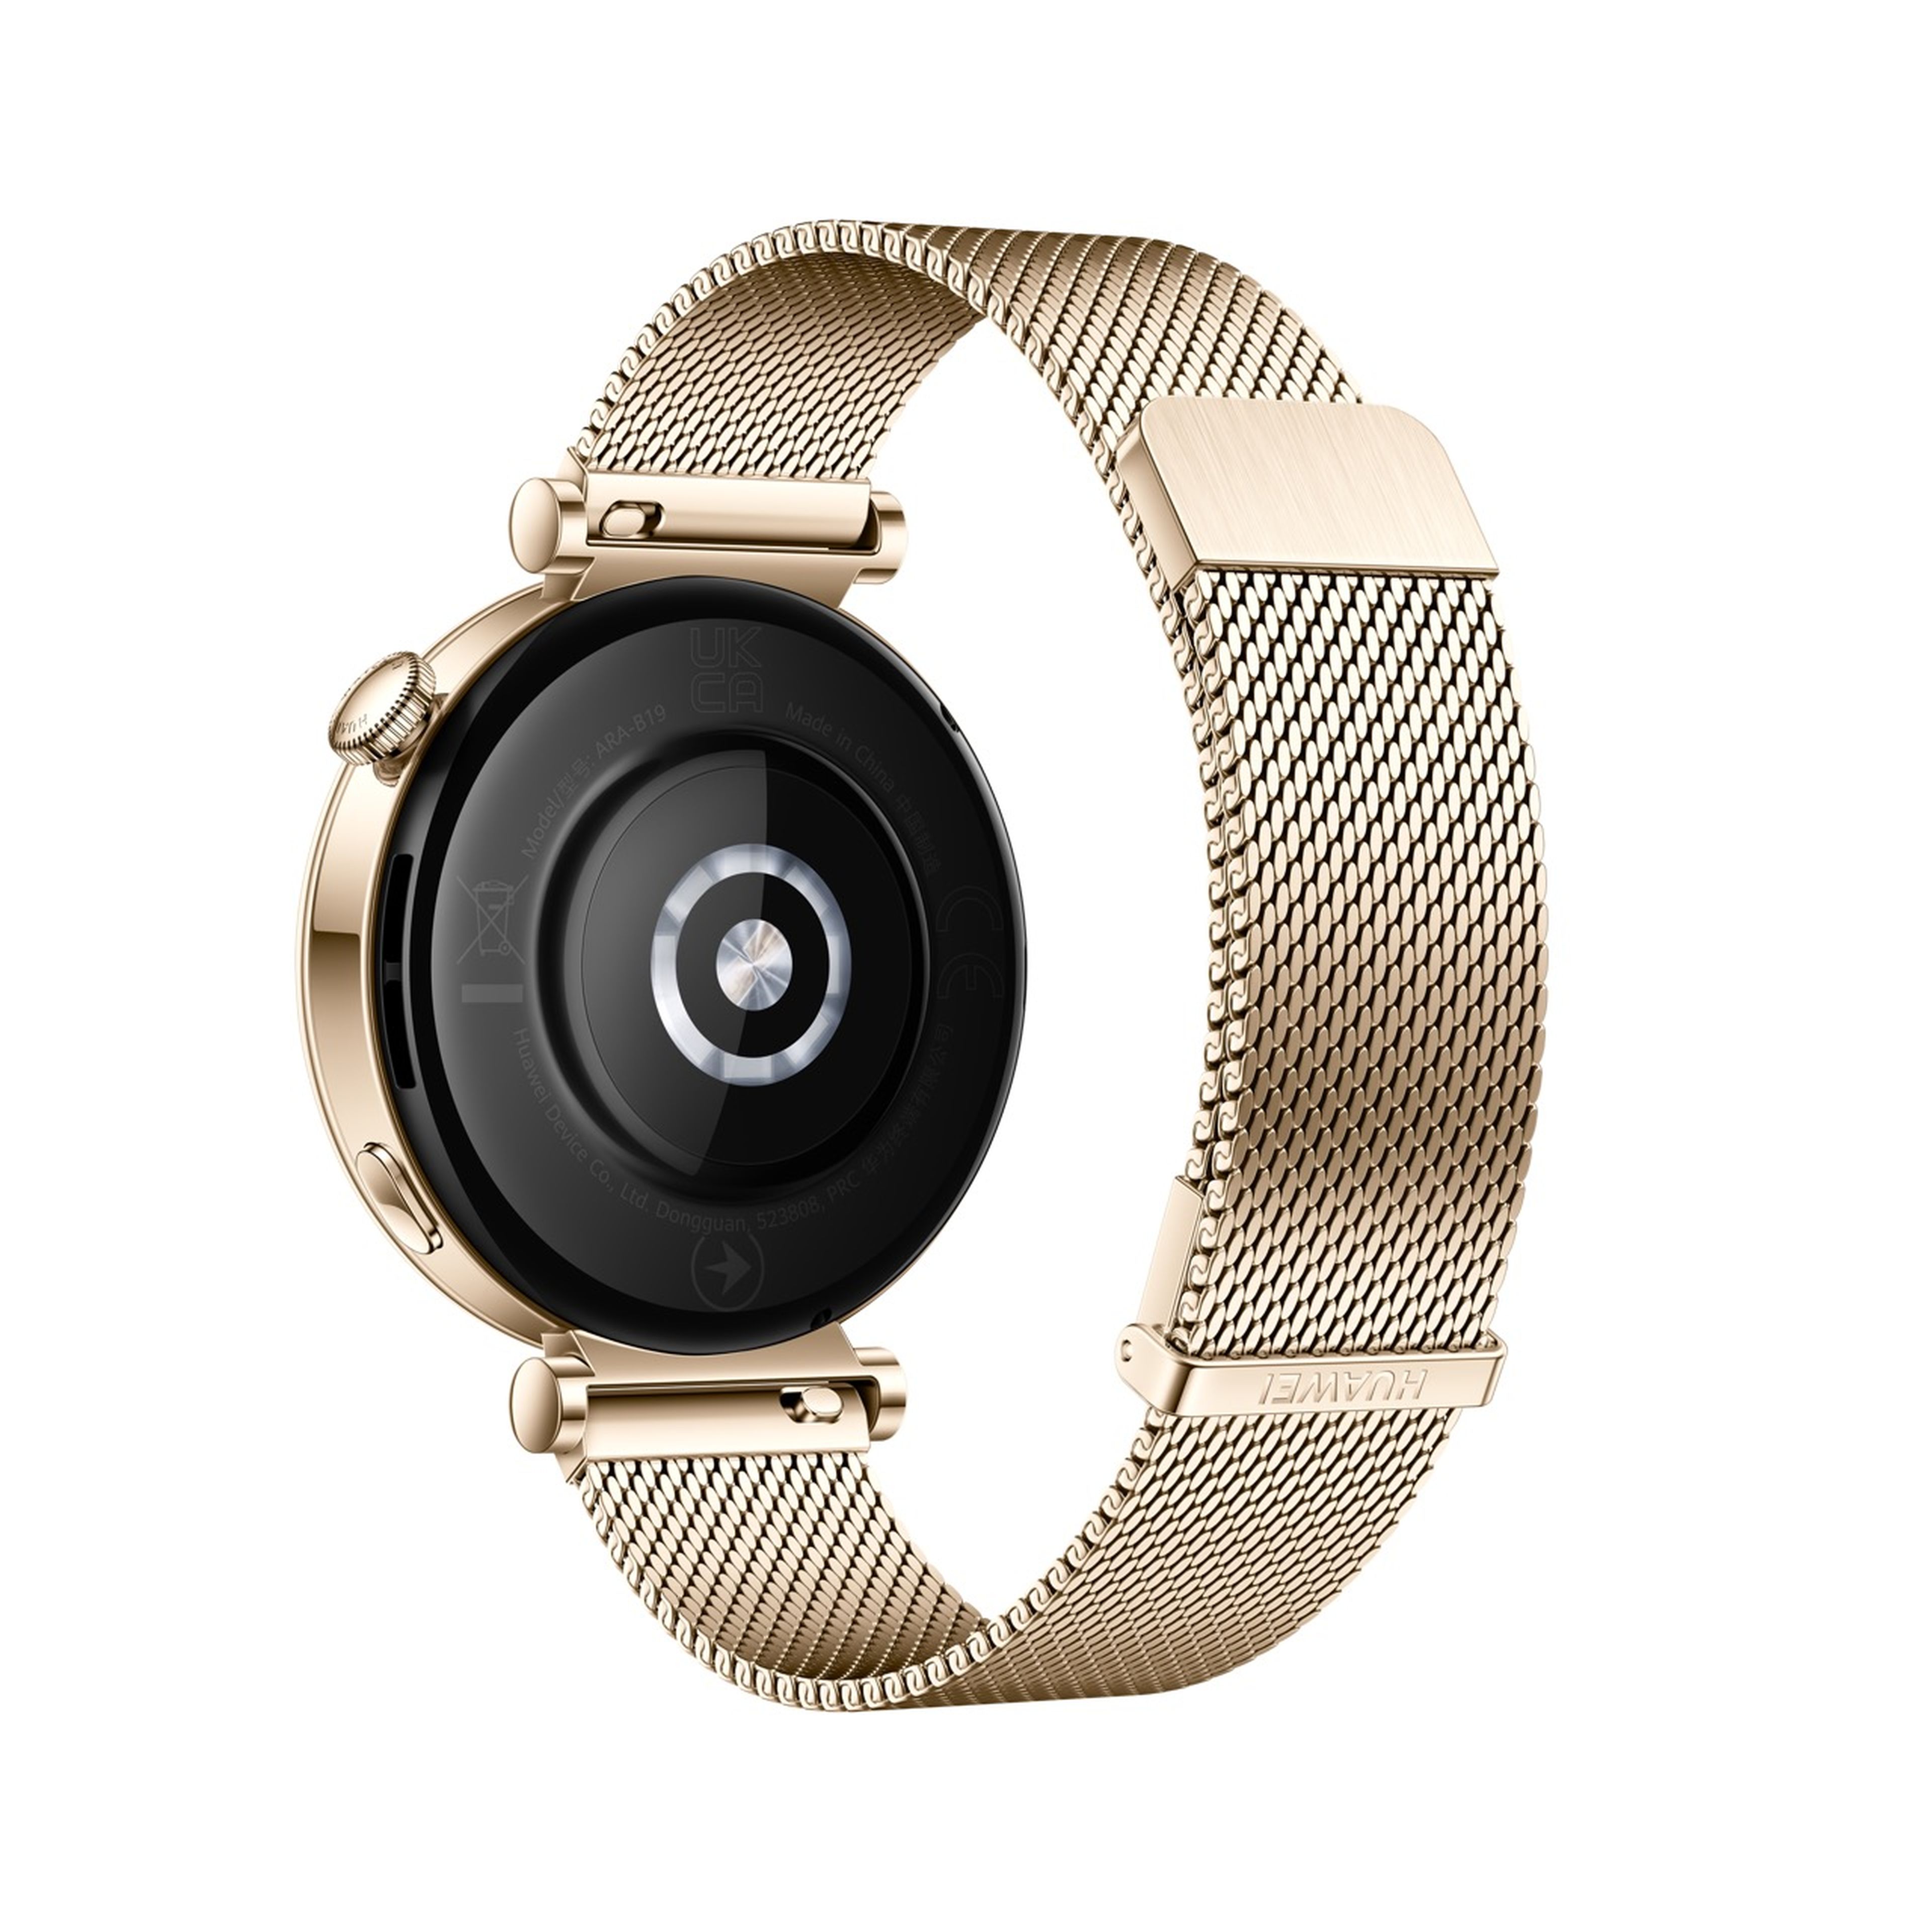 Huawei Watch GT 4 - Golden Metal